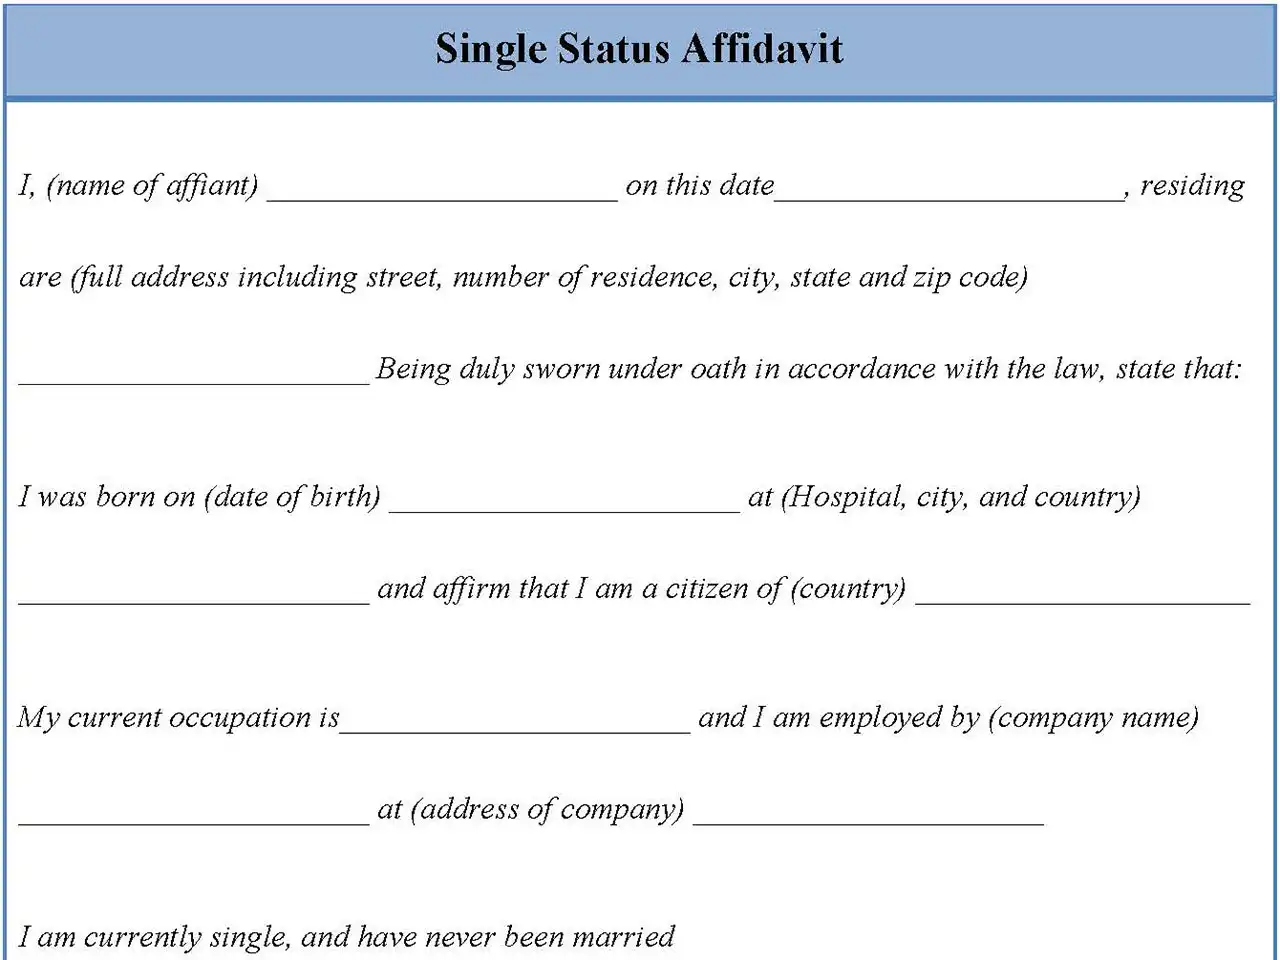 Single Status Affidavit Form